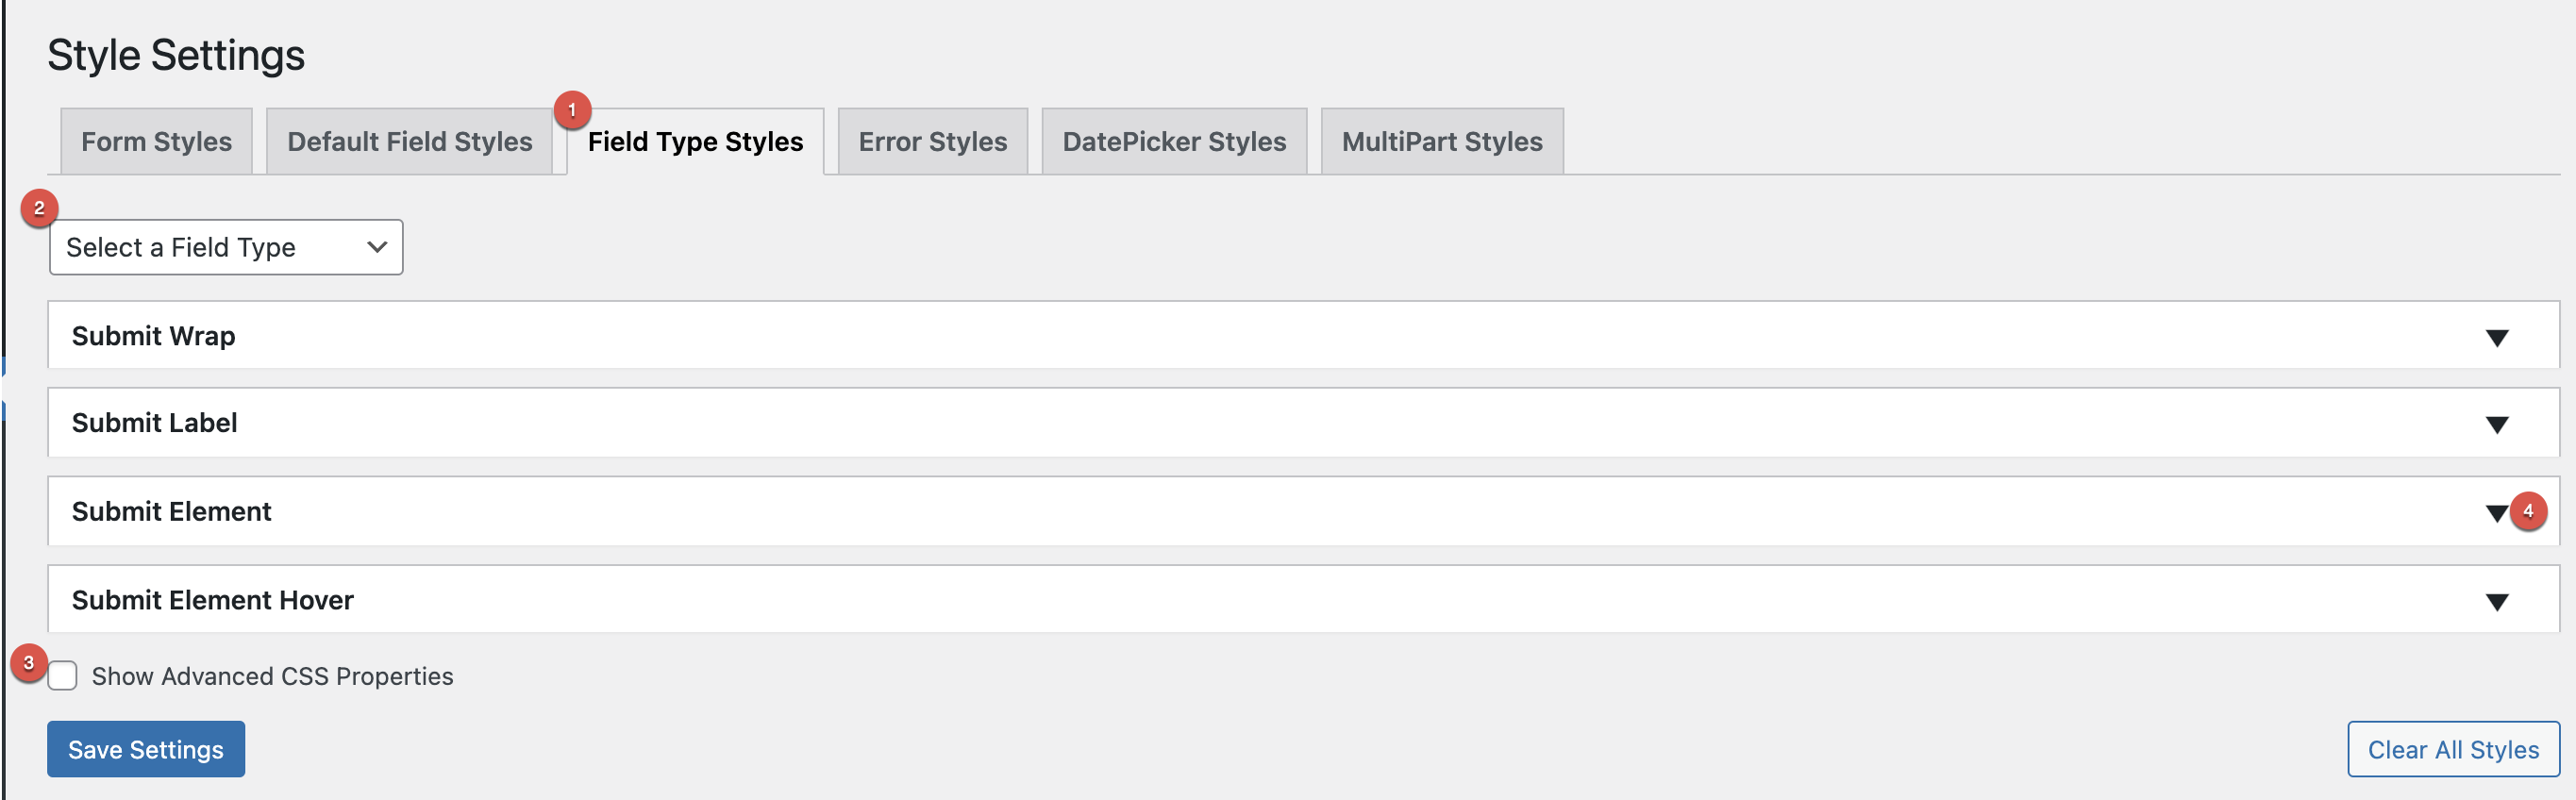 submit button styles menu 